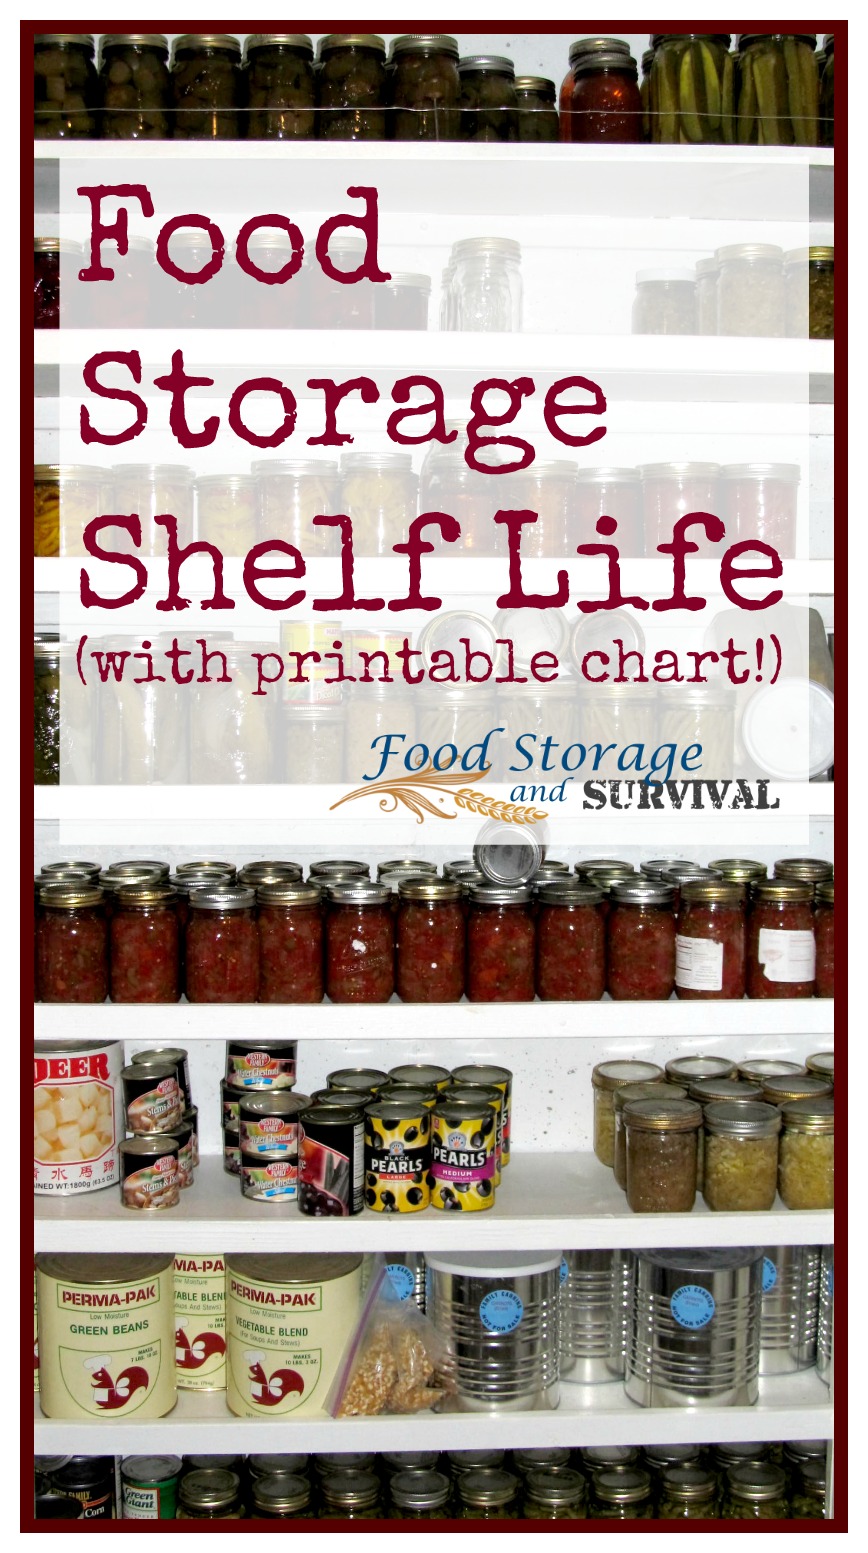 Food Storage Shelf Life (plus printable chart!)